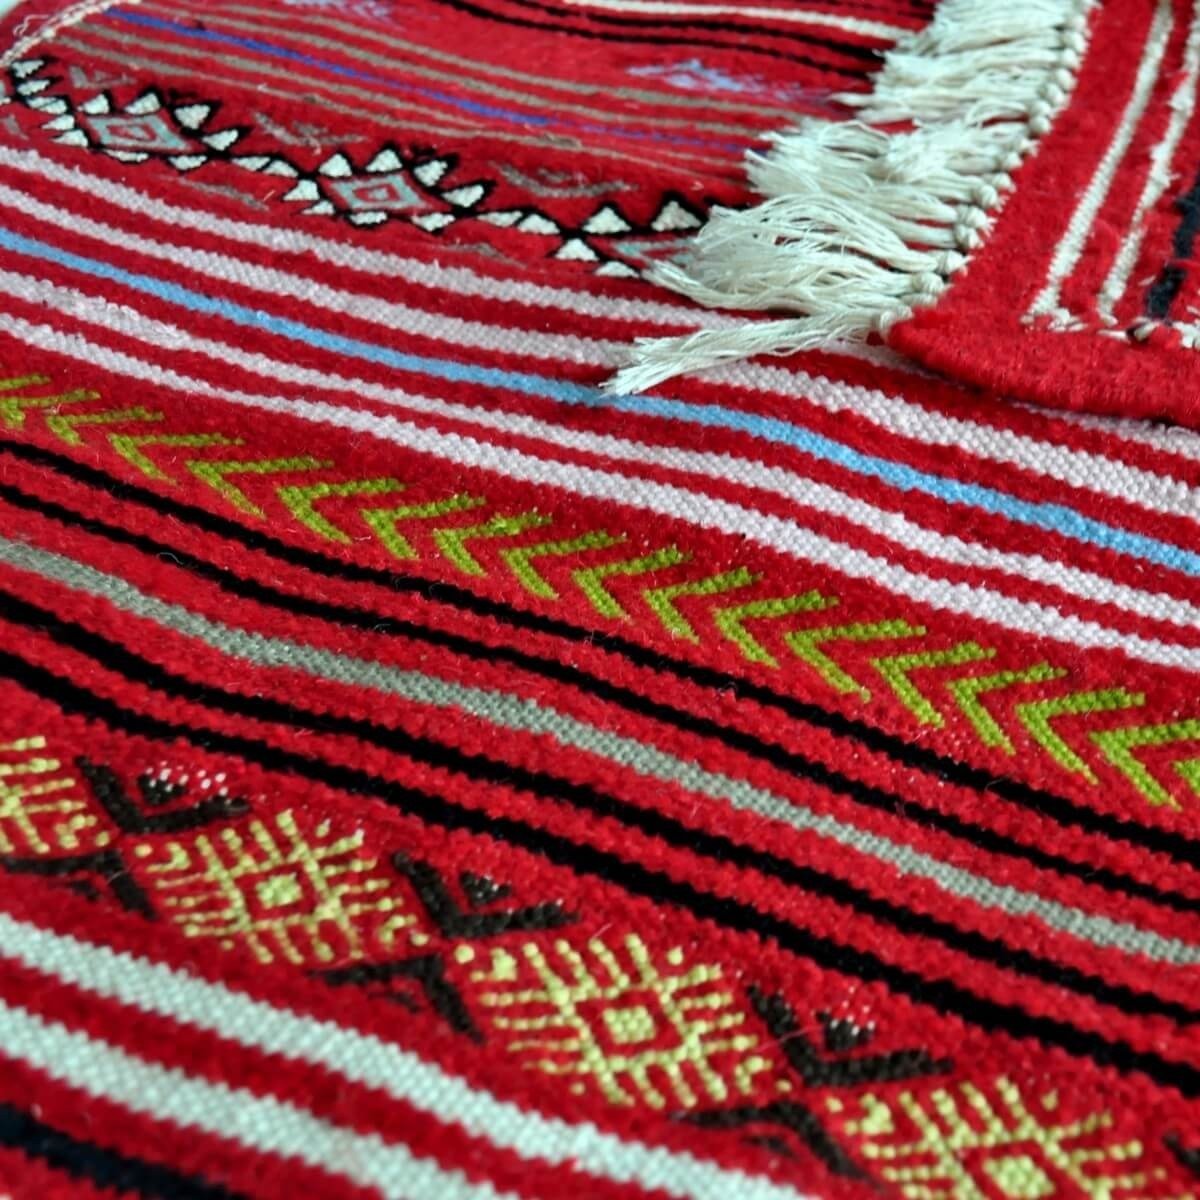 Berber tapijt Tapijt Kilim lang Aljerid 75x195 Rood (Handgeweven, Wol, Tunesië) Tunesisch kilimdeken, Marokkaanse stijl. Rechtho